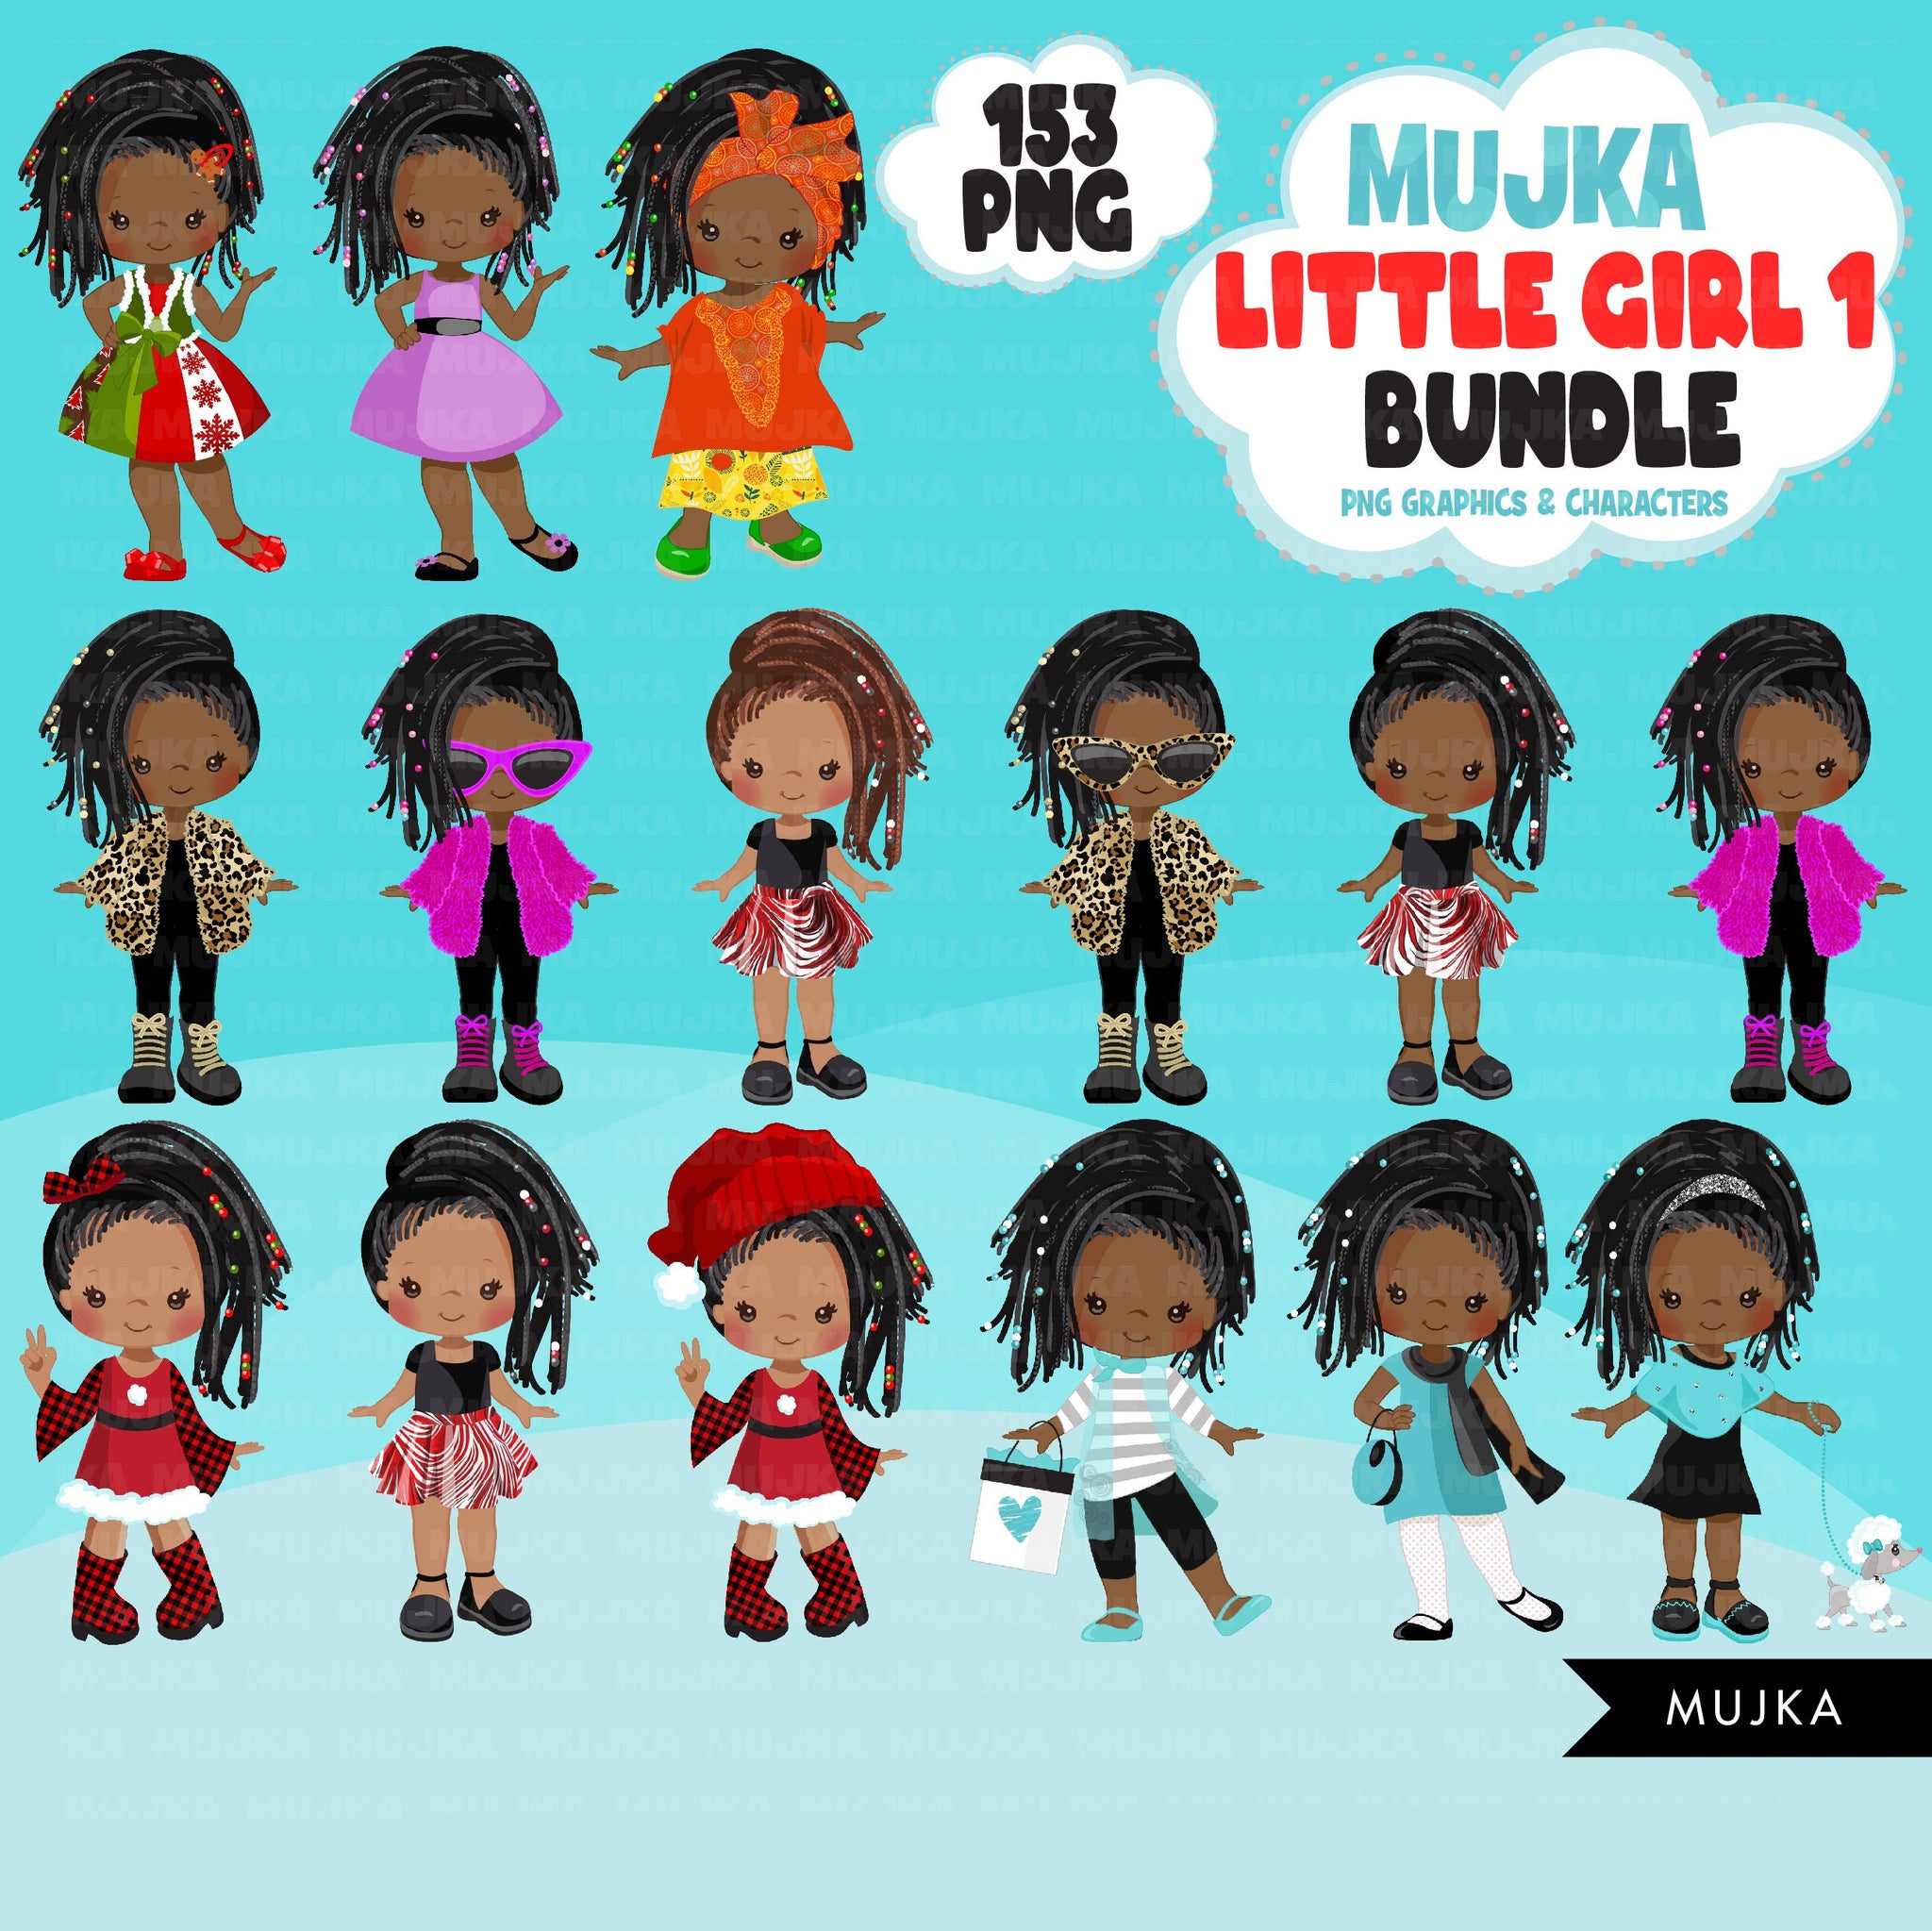 Black girl png Bundle, Black girl magic, black girl art, little girl digital stickers, dreadlocks, cute black girl bundle, planner stickers